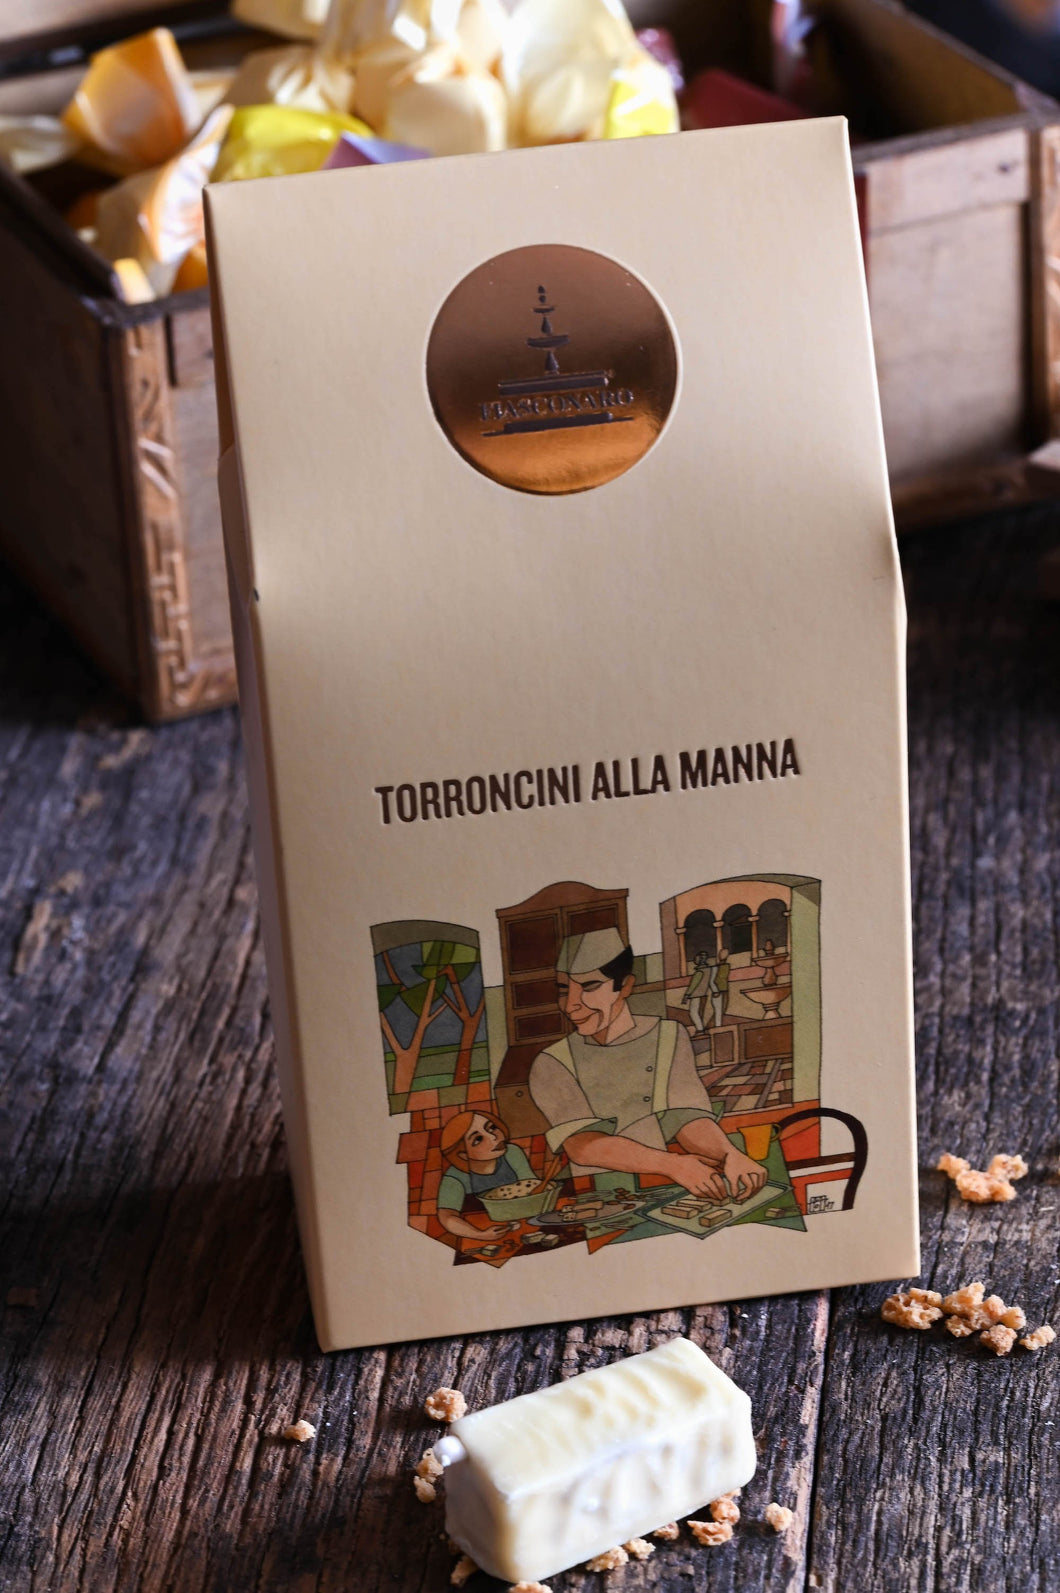 FIASCONARO - Torroncini (nougat) alla Manna (120g) - Les produits du soleil